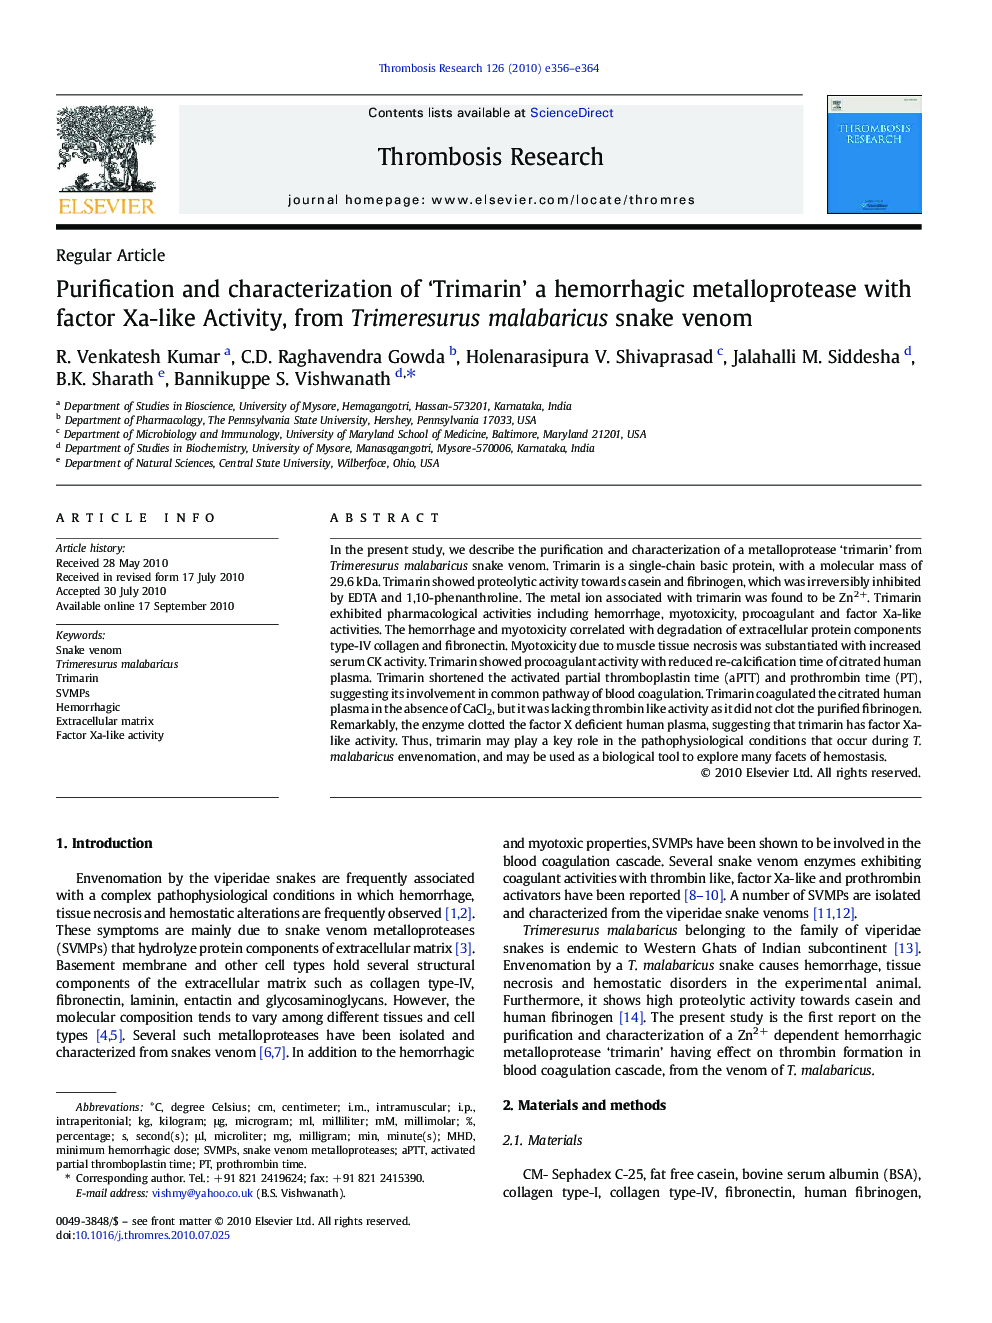 Purification and characterization of ‘Trimarin’ a hemorrhagic metalloprotease with factor Xa-like Activity, from Trimeresurus malabaricus snake venom